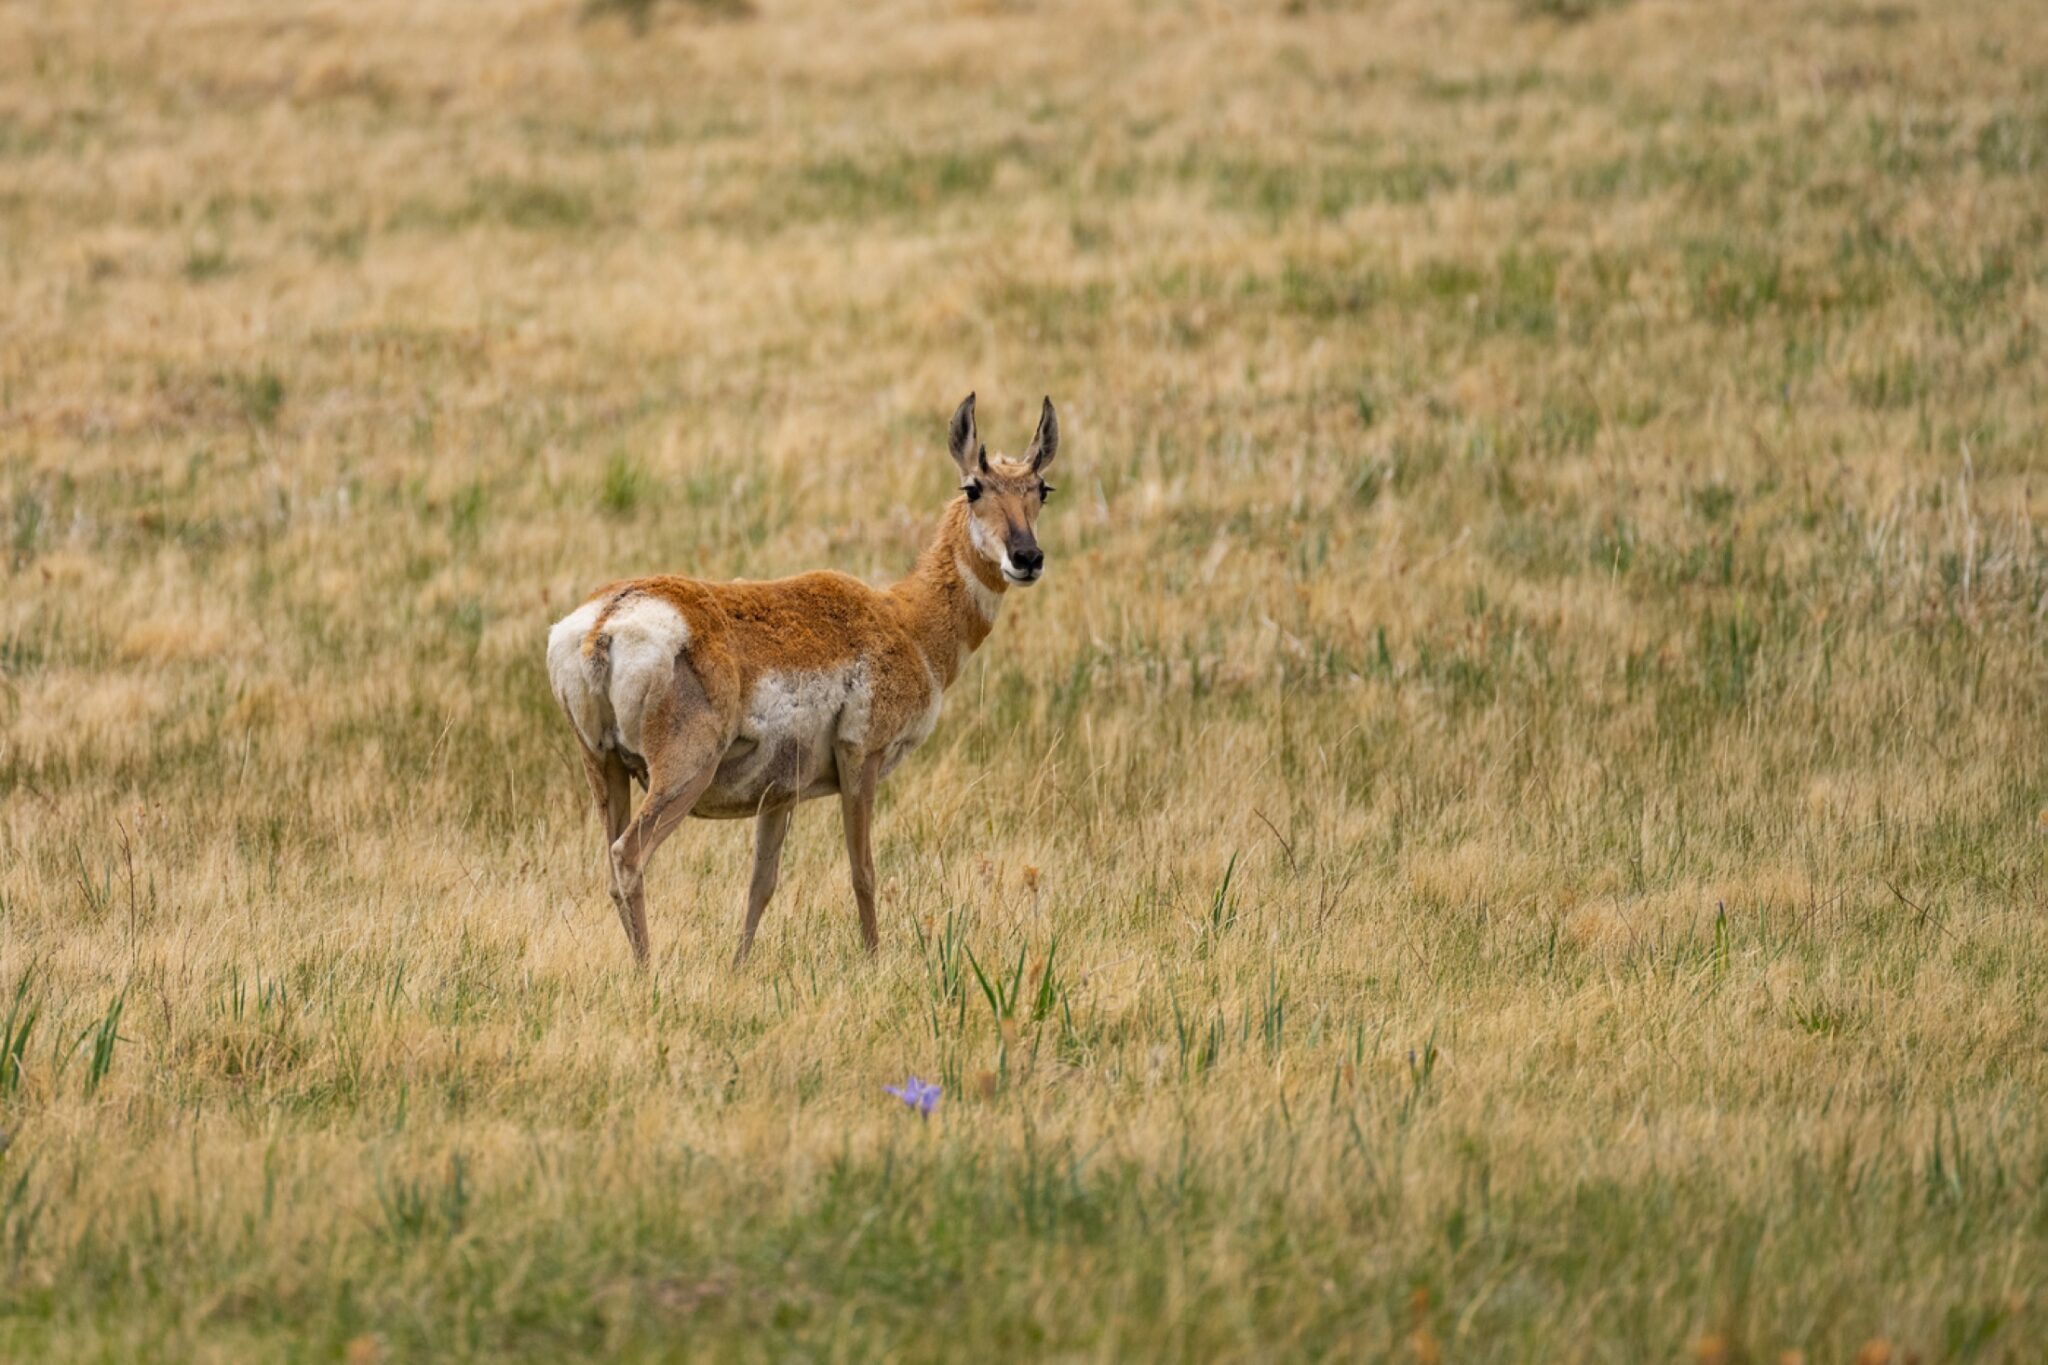 An antelope looking around